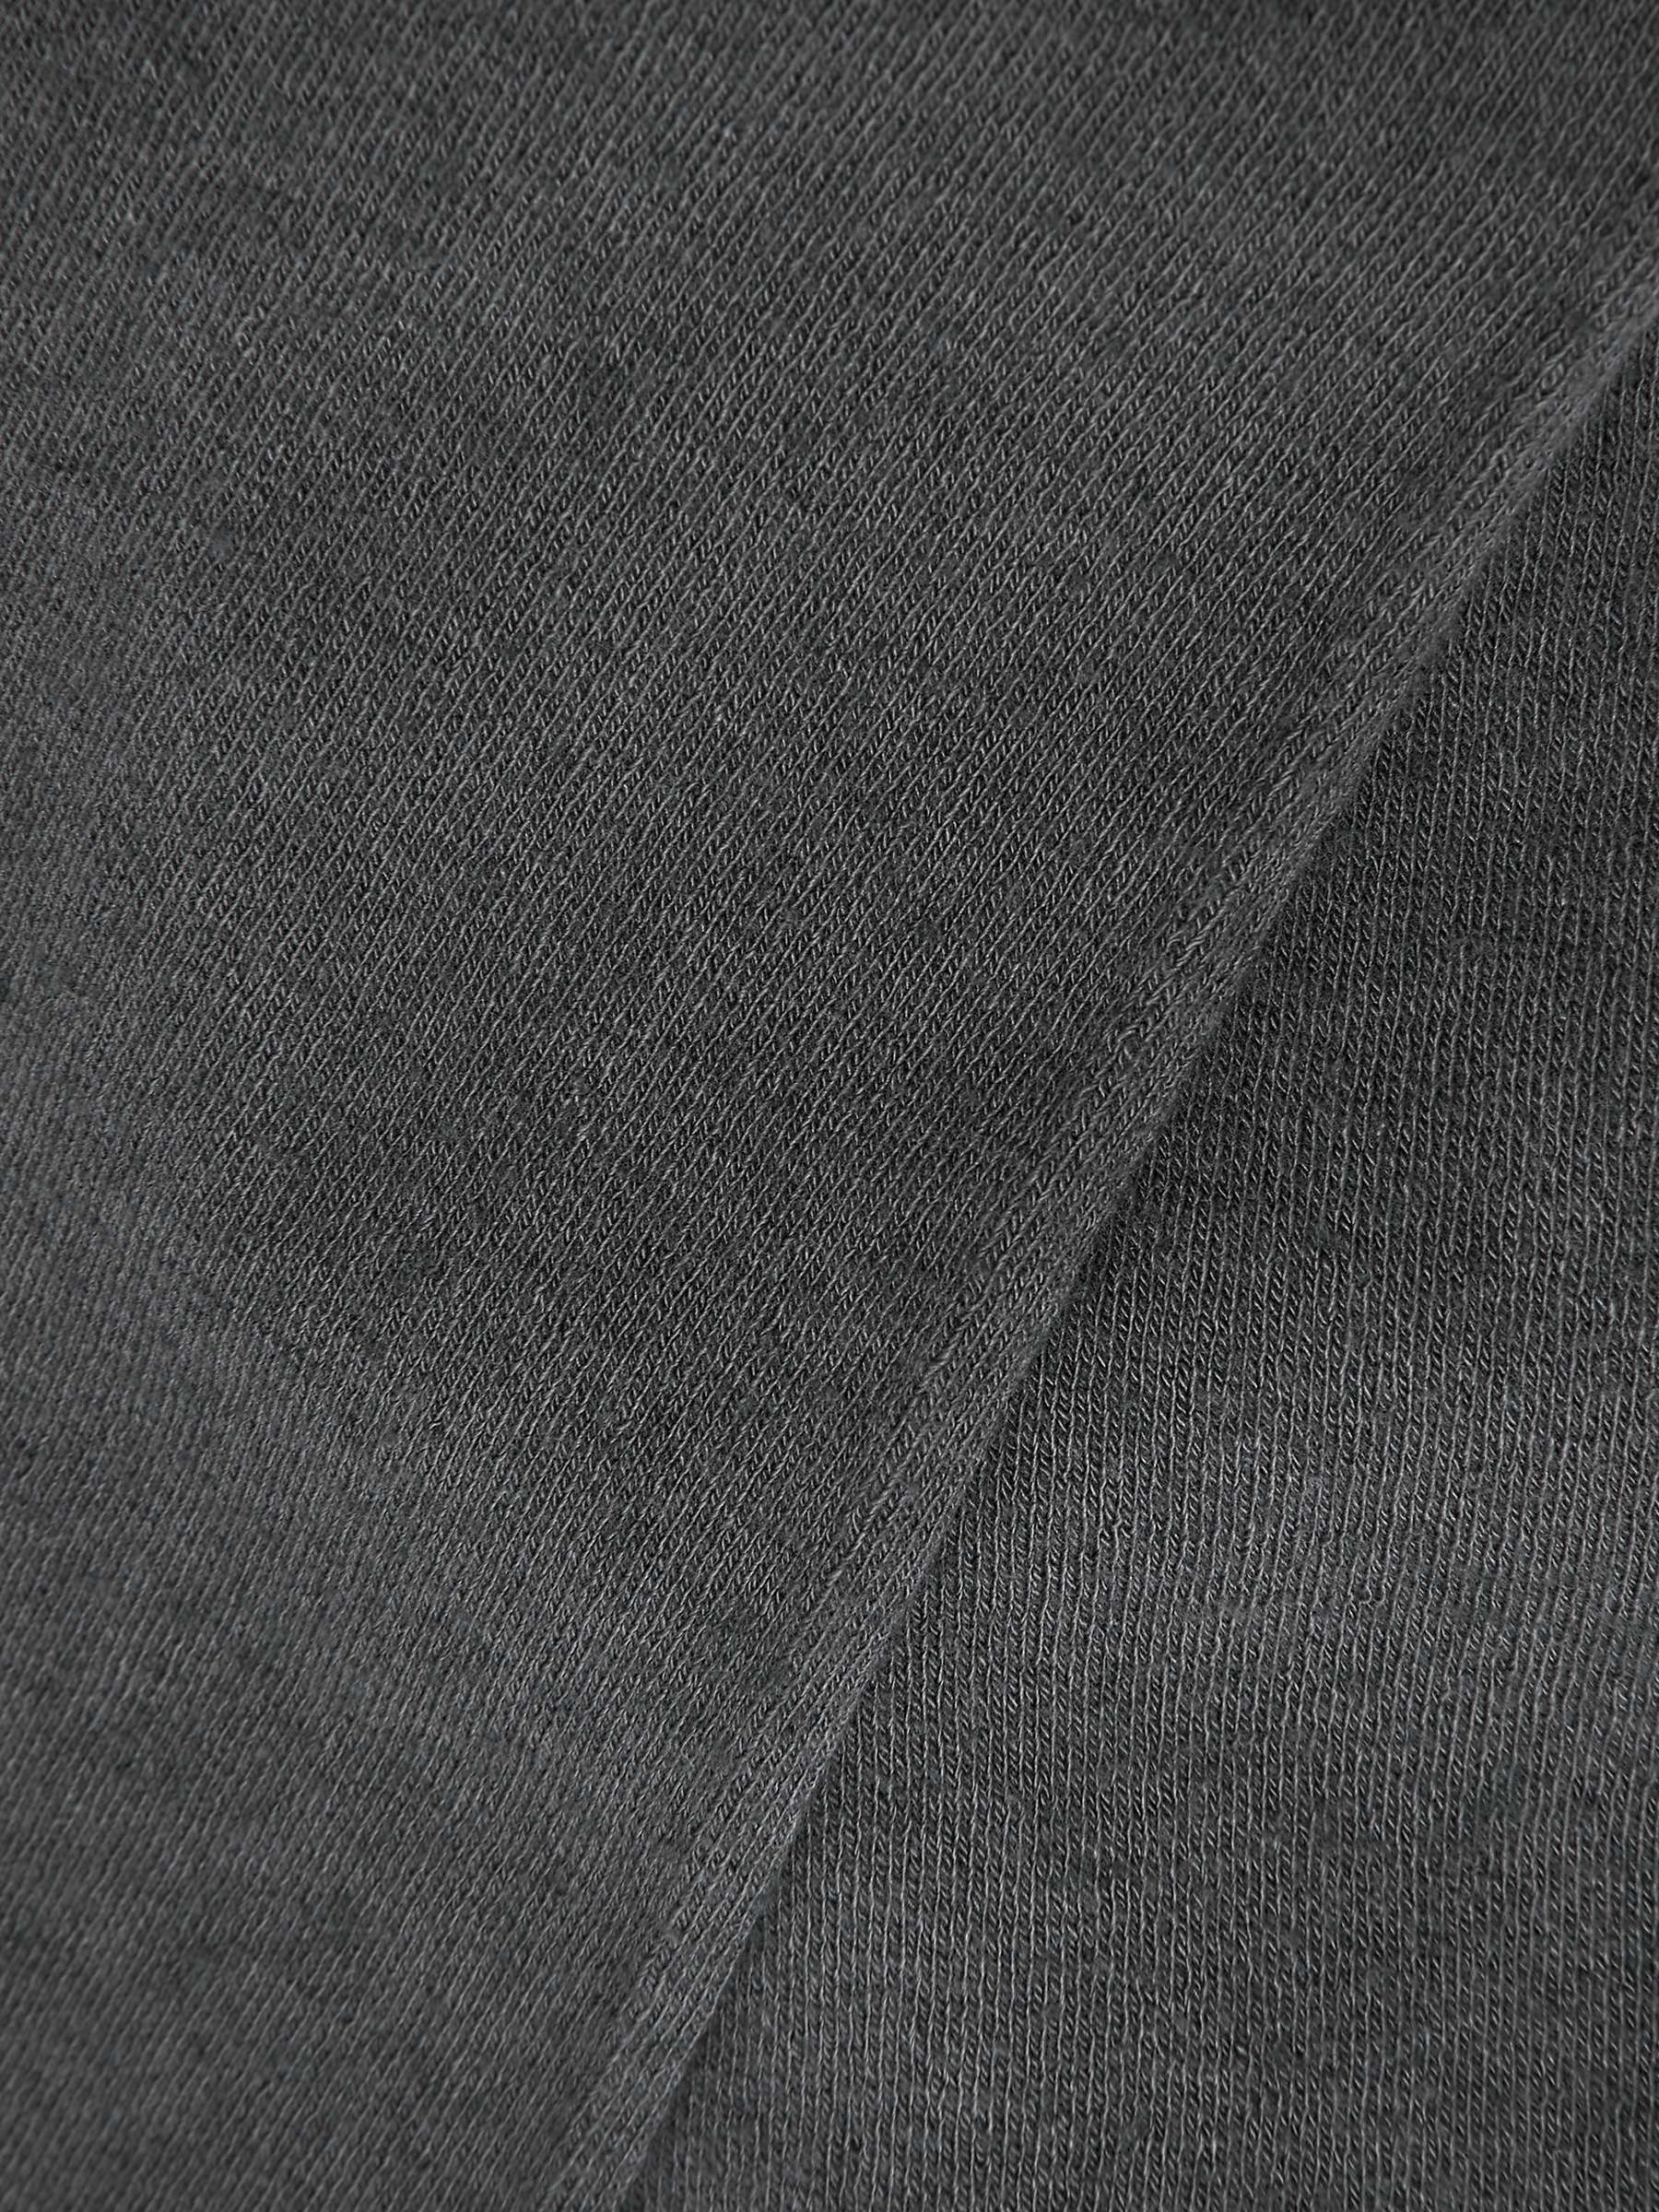 Buy John Lewis 270 Denier Opaque Wool Blend Tights Online at johnlewis.com